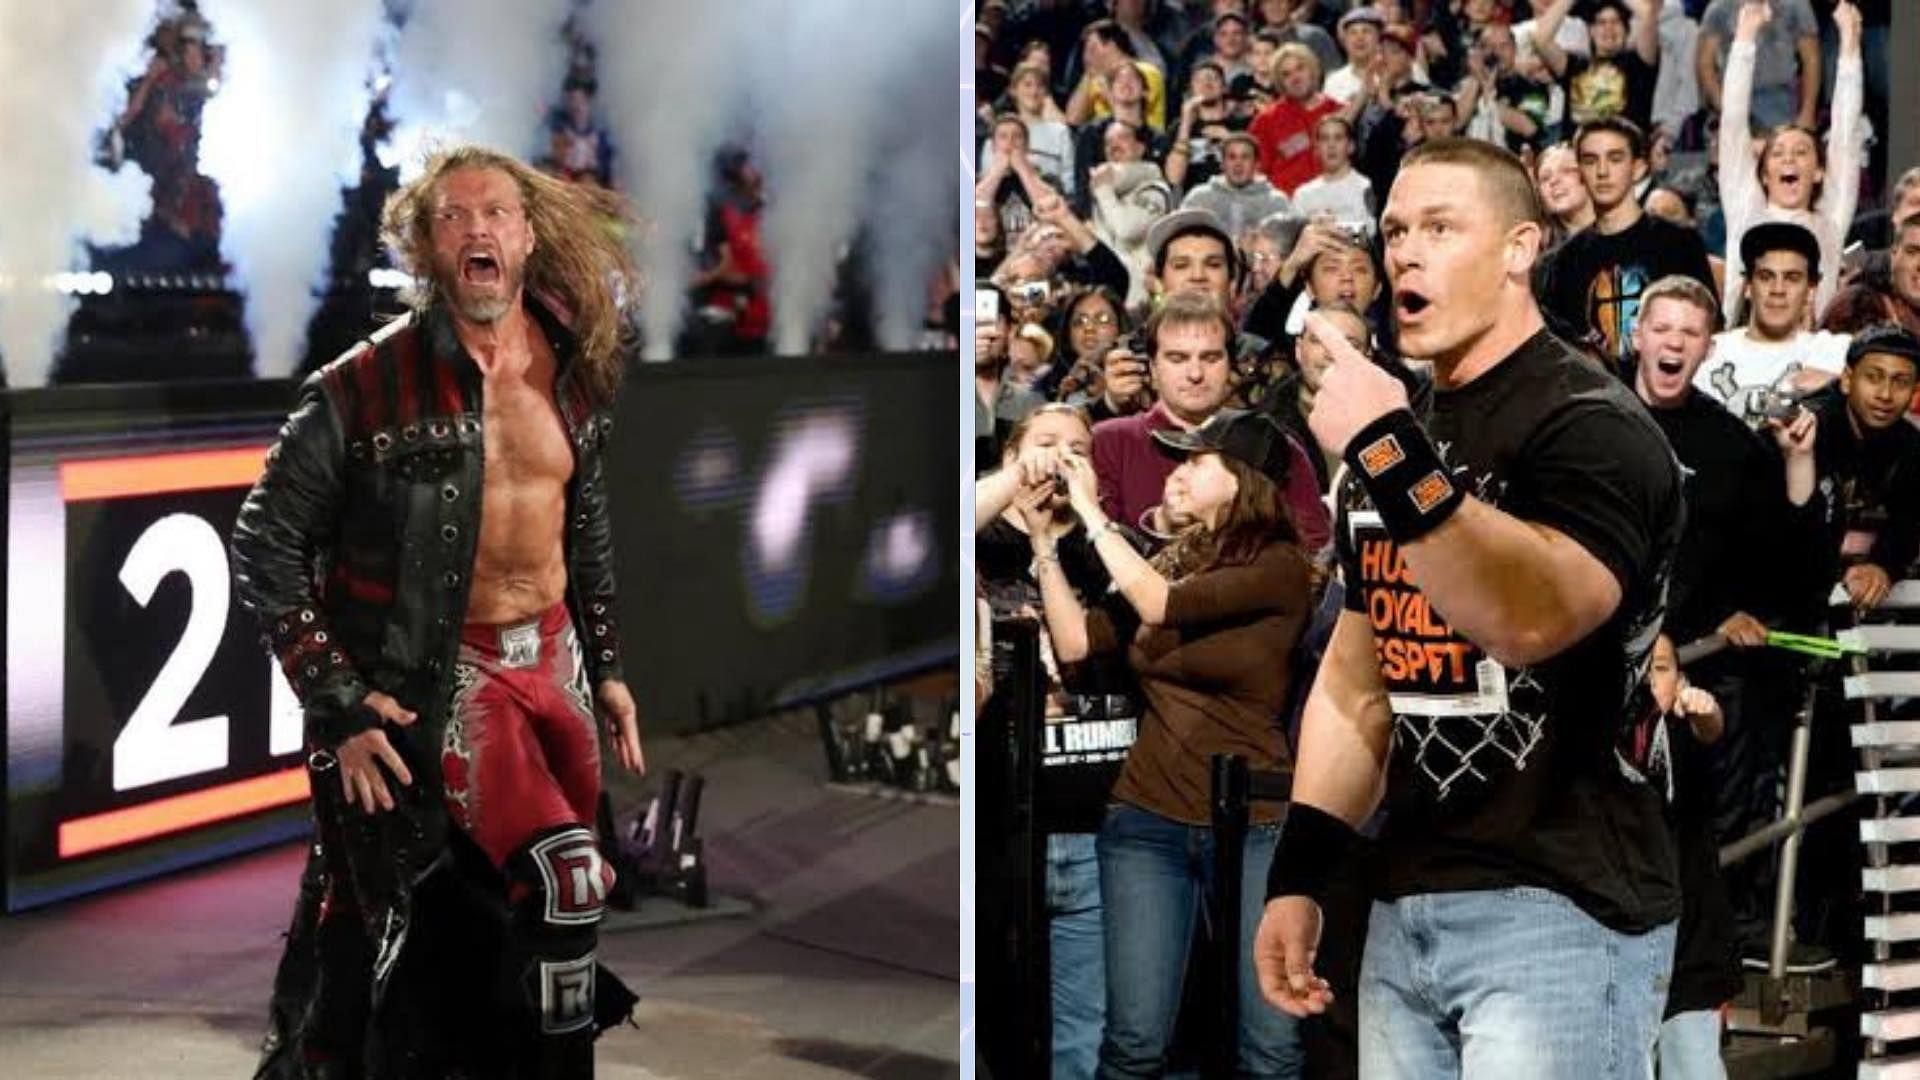 WWE Superstars Edge and John Cena